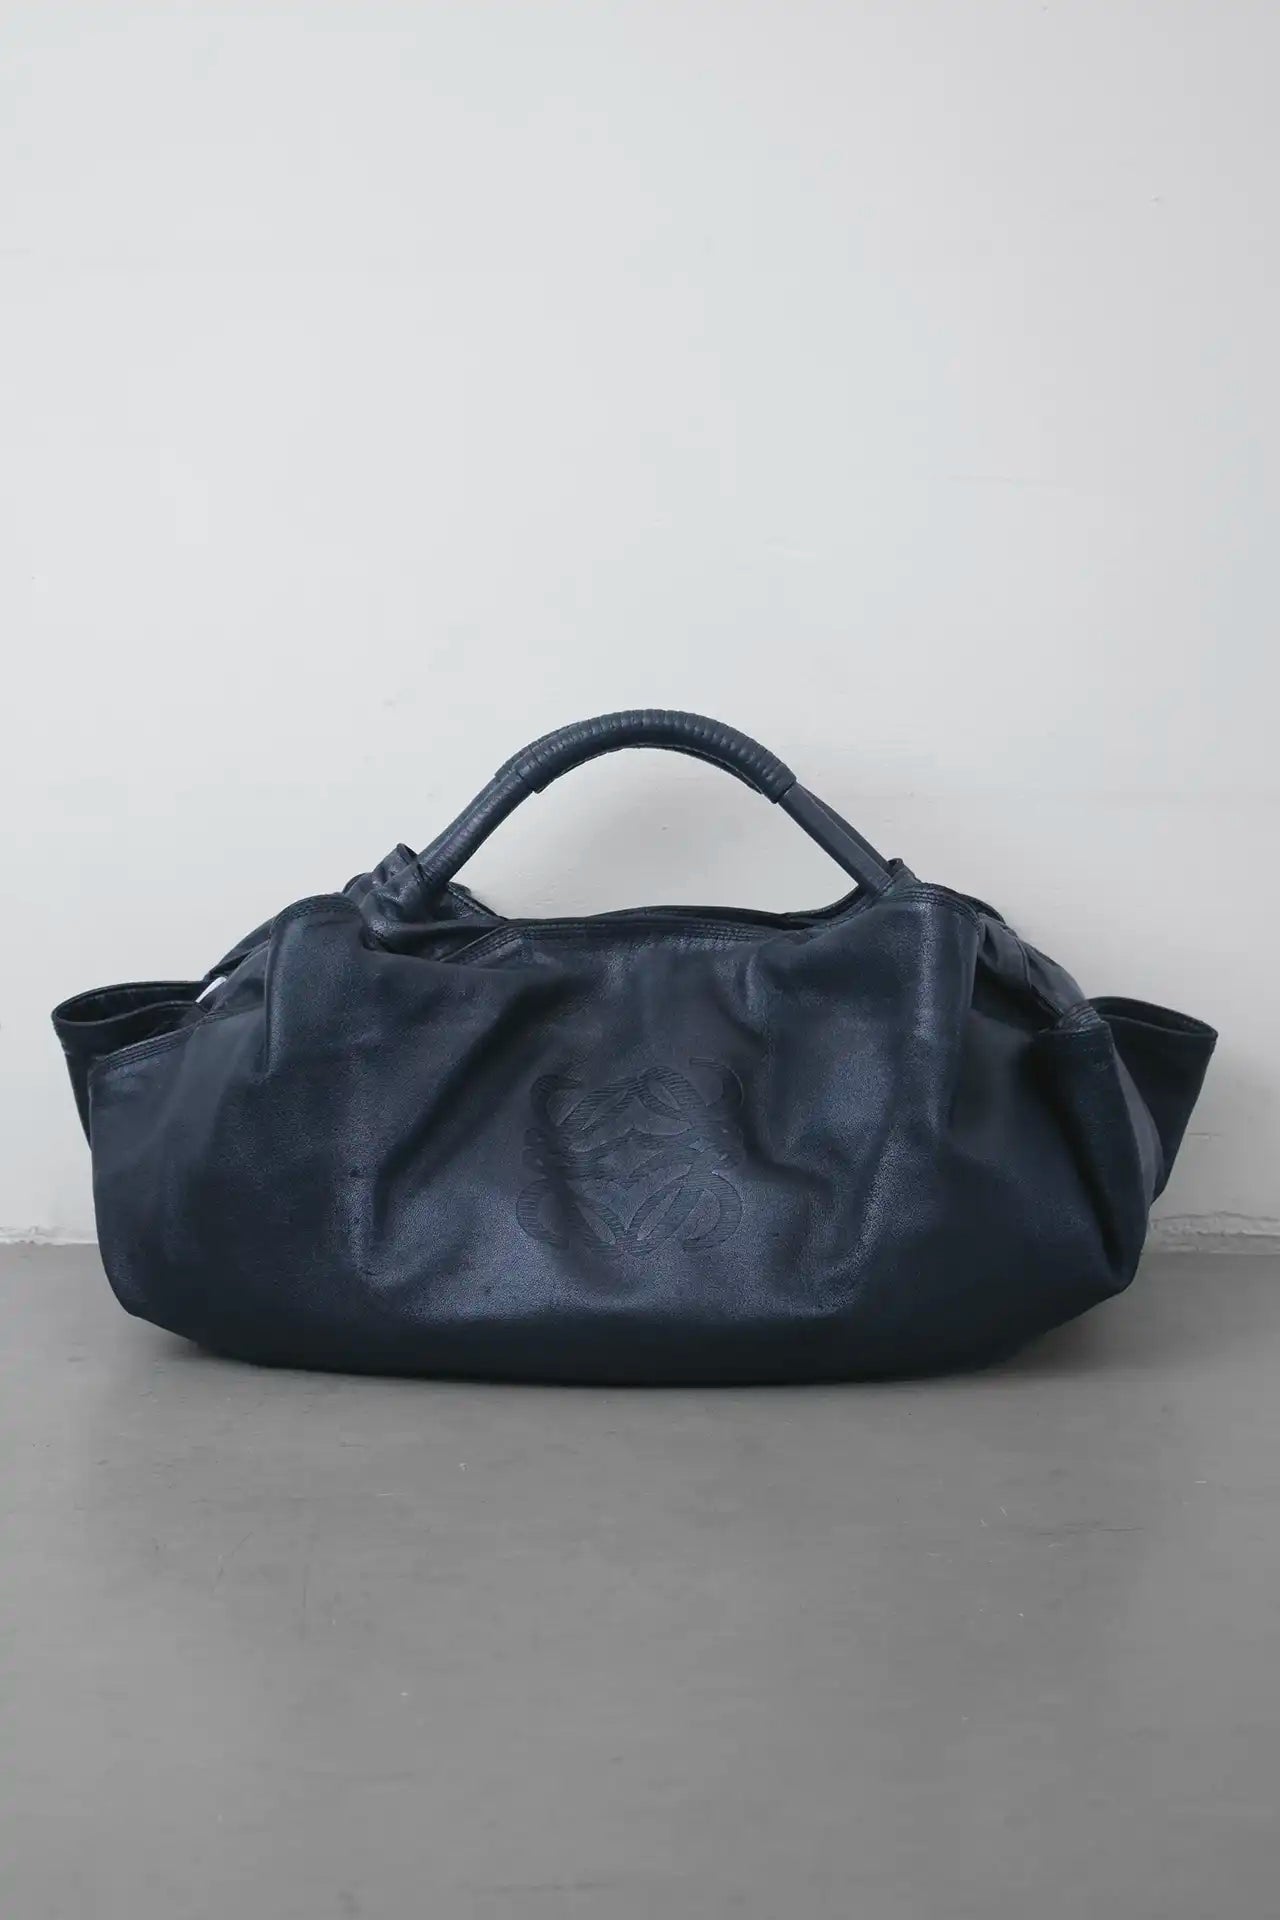 Loewe Paseo Leather Bag- black